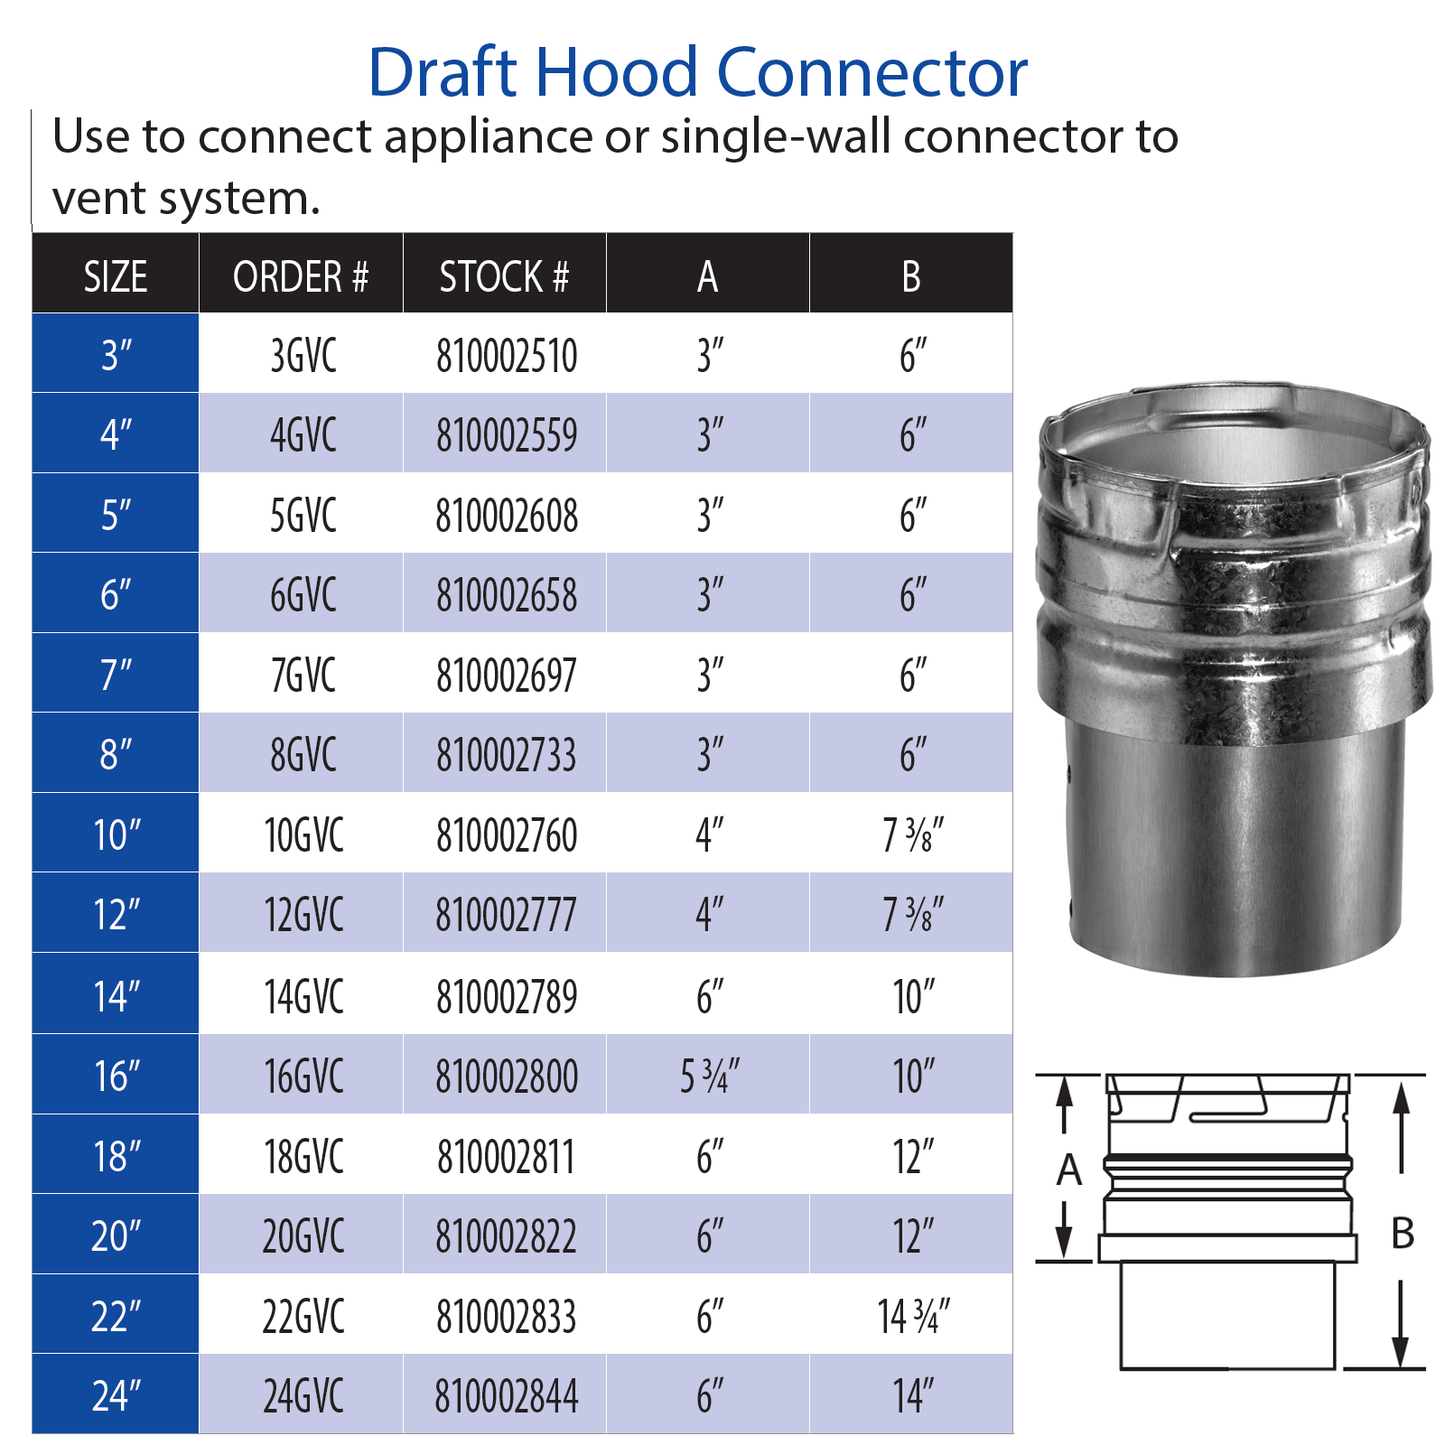 DuraVent Type B Draft Hood Connector | 5GVC